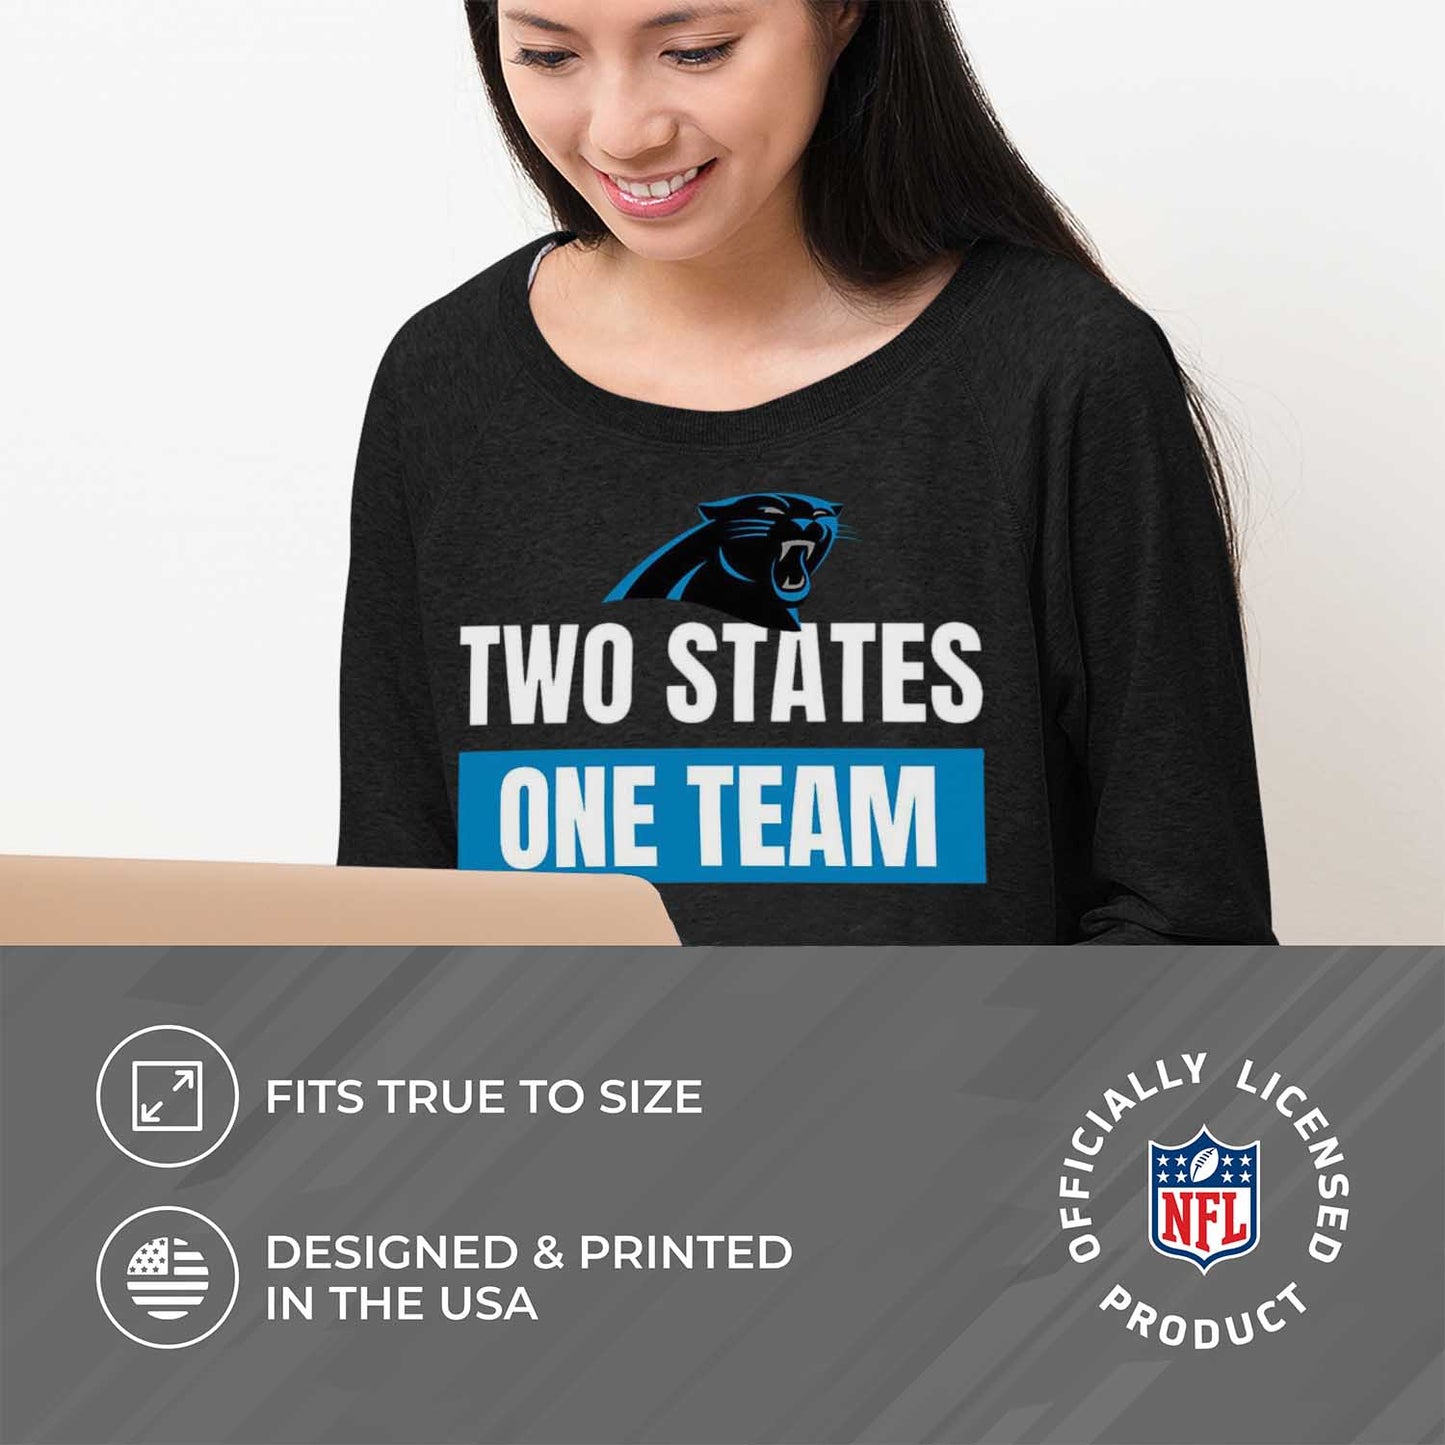 Carolina Panthers NFL Womens Plus Size Team Slogan Crew Neck - Black